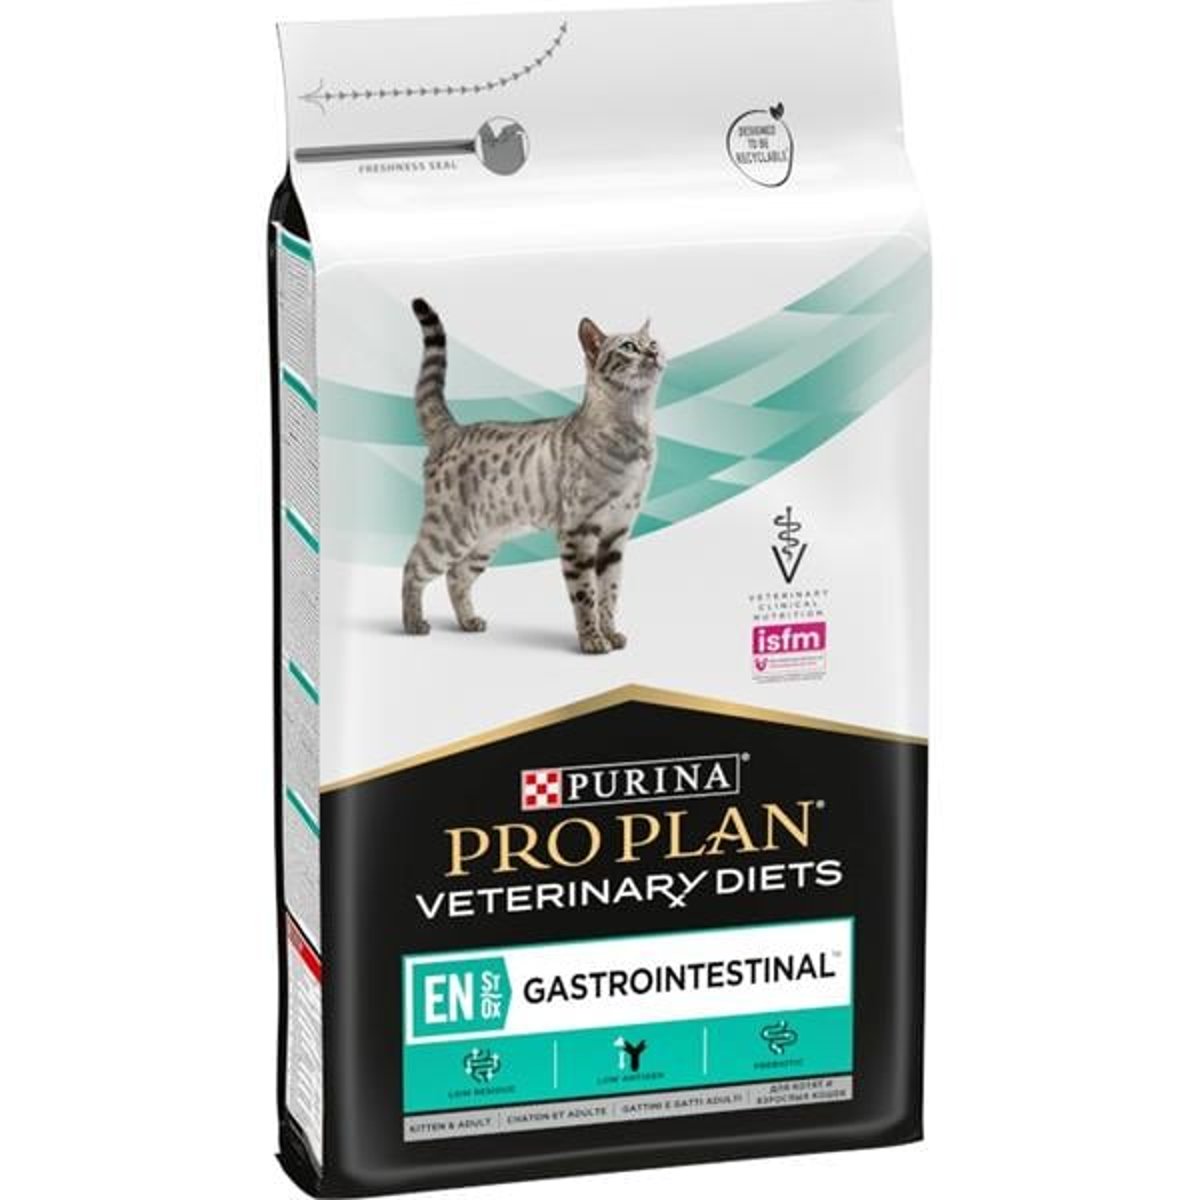 Pro Plan Veterinary Diets Gastrointestinal krmivo pro koťata a dospělé kočky